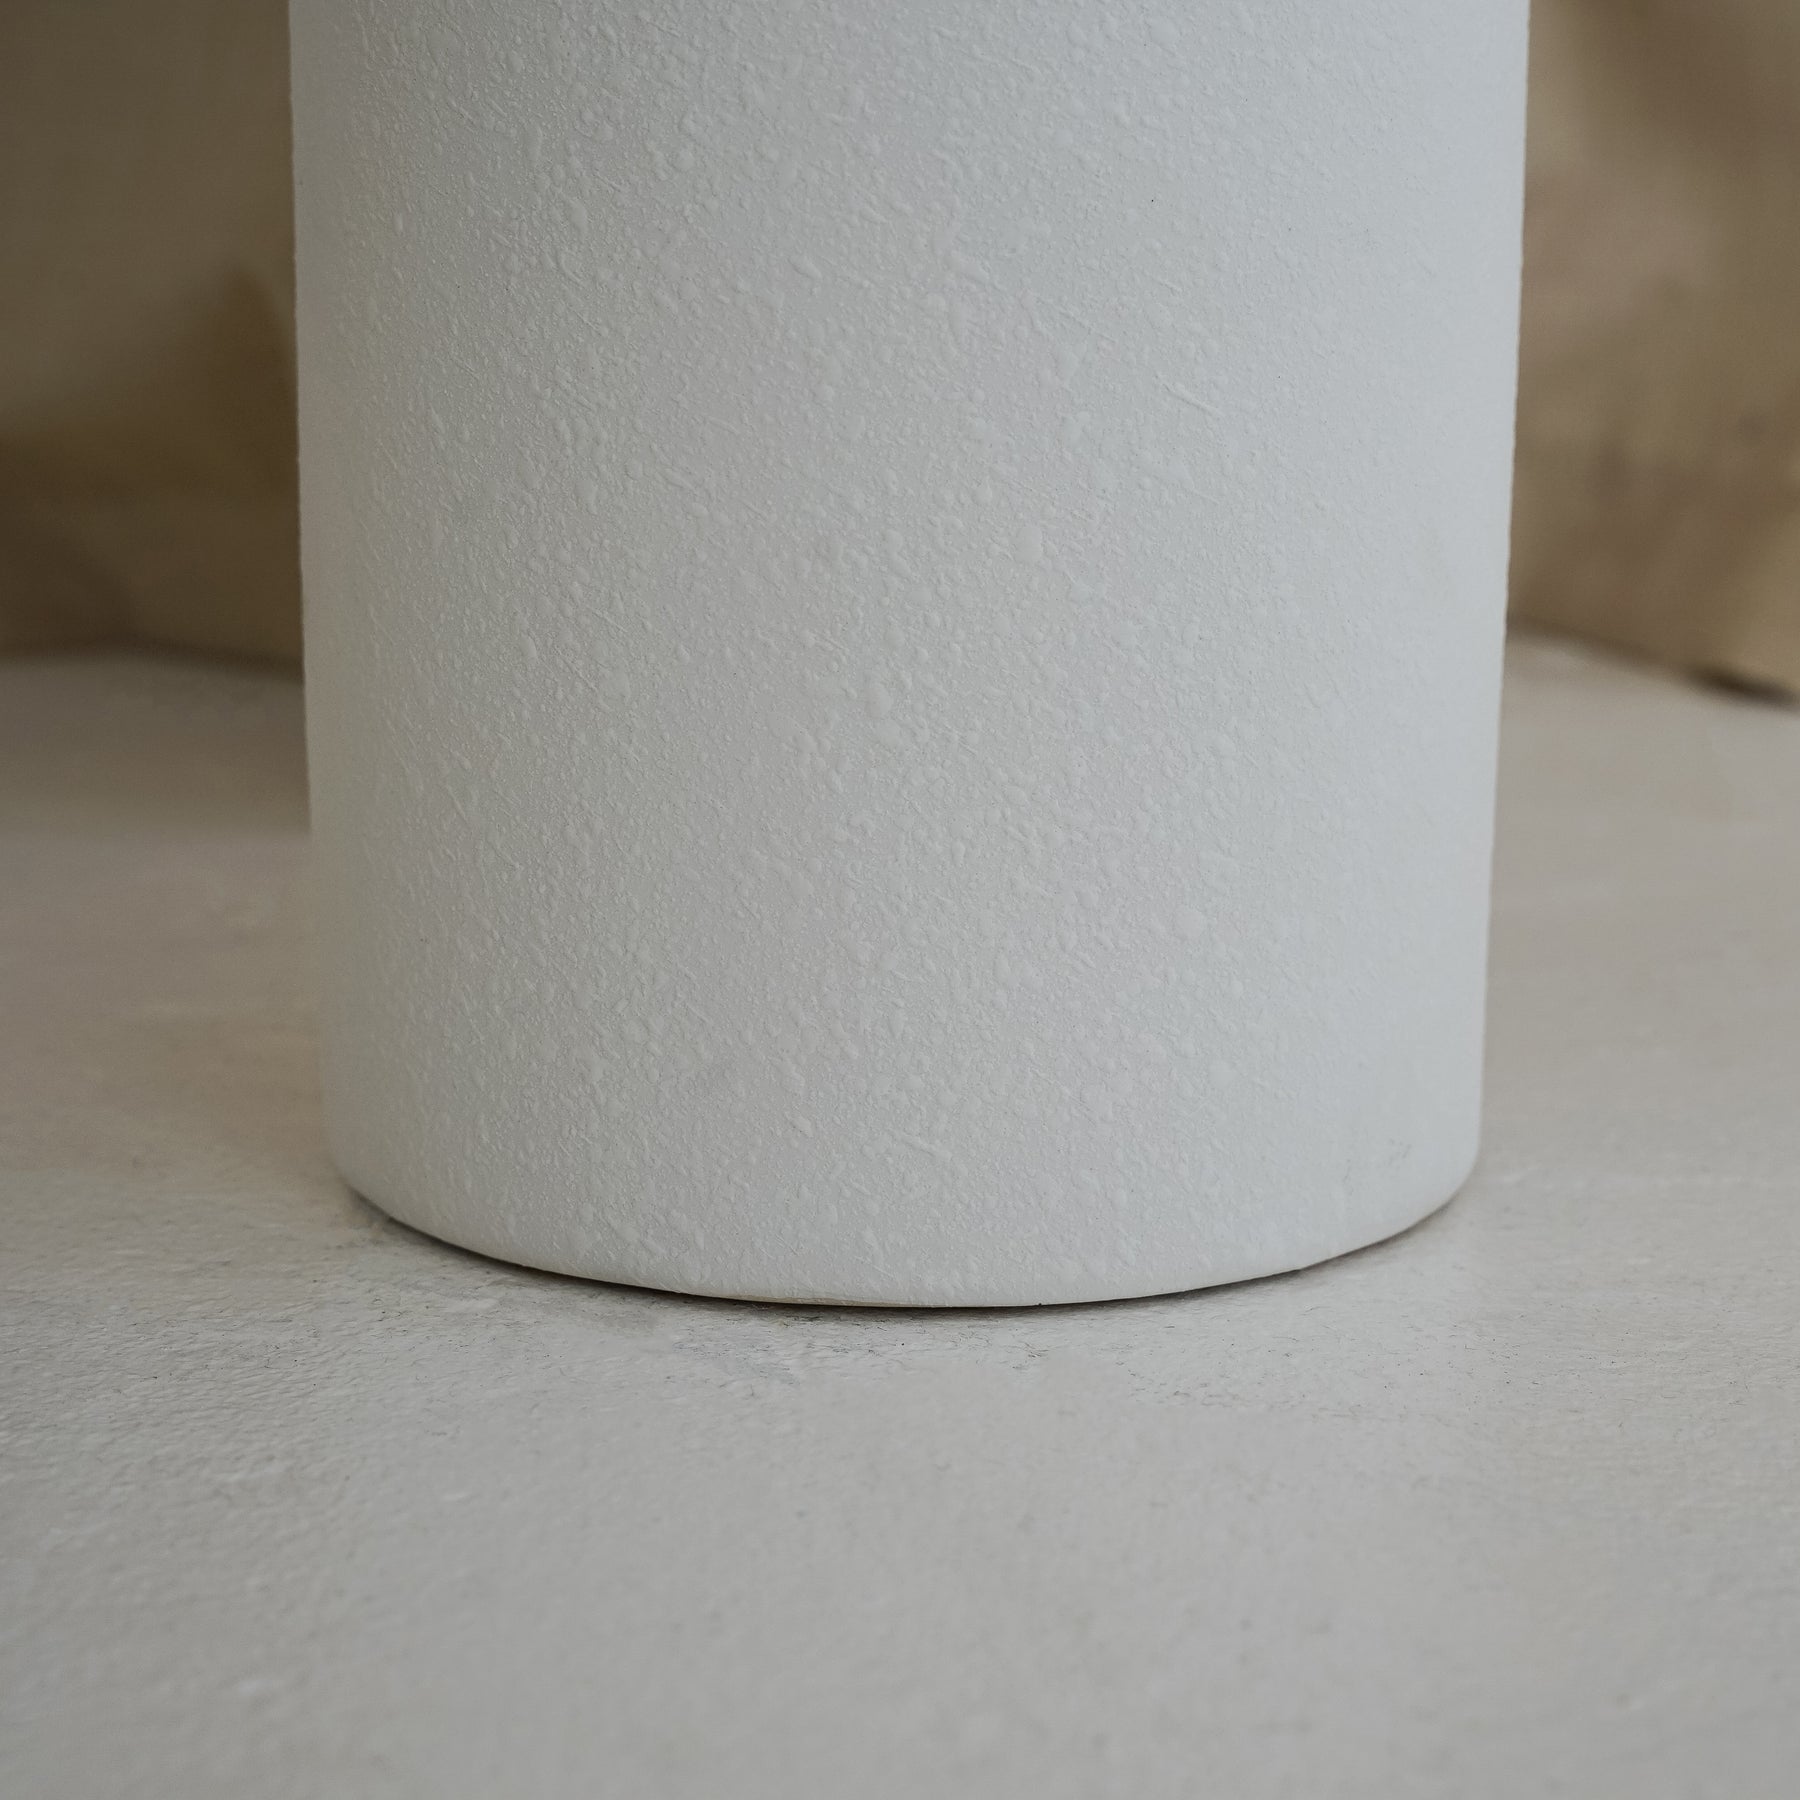 White textured ceramic small vase detail shot of base